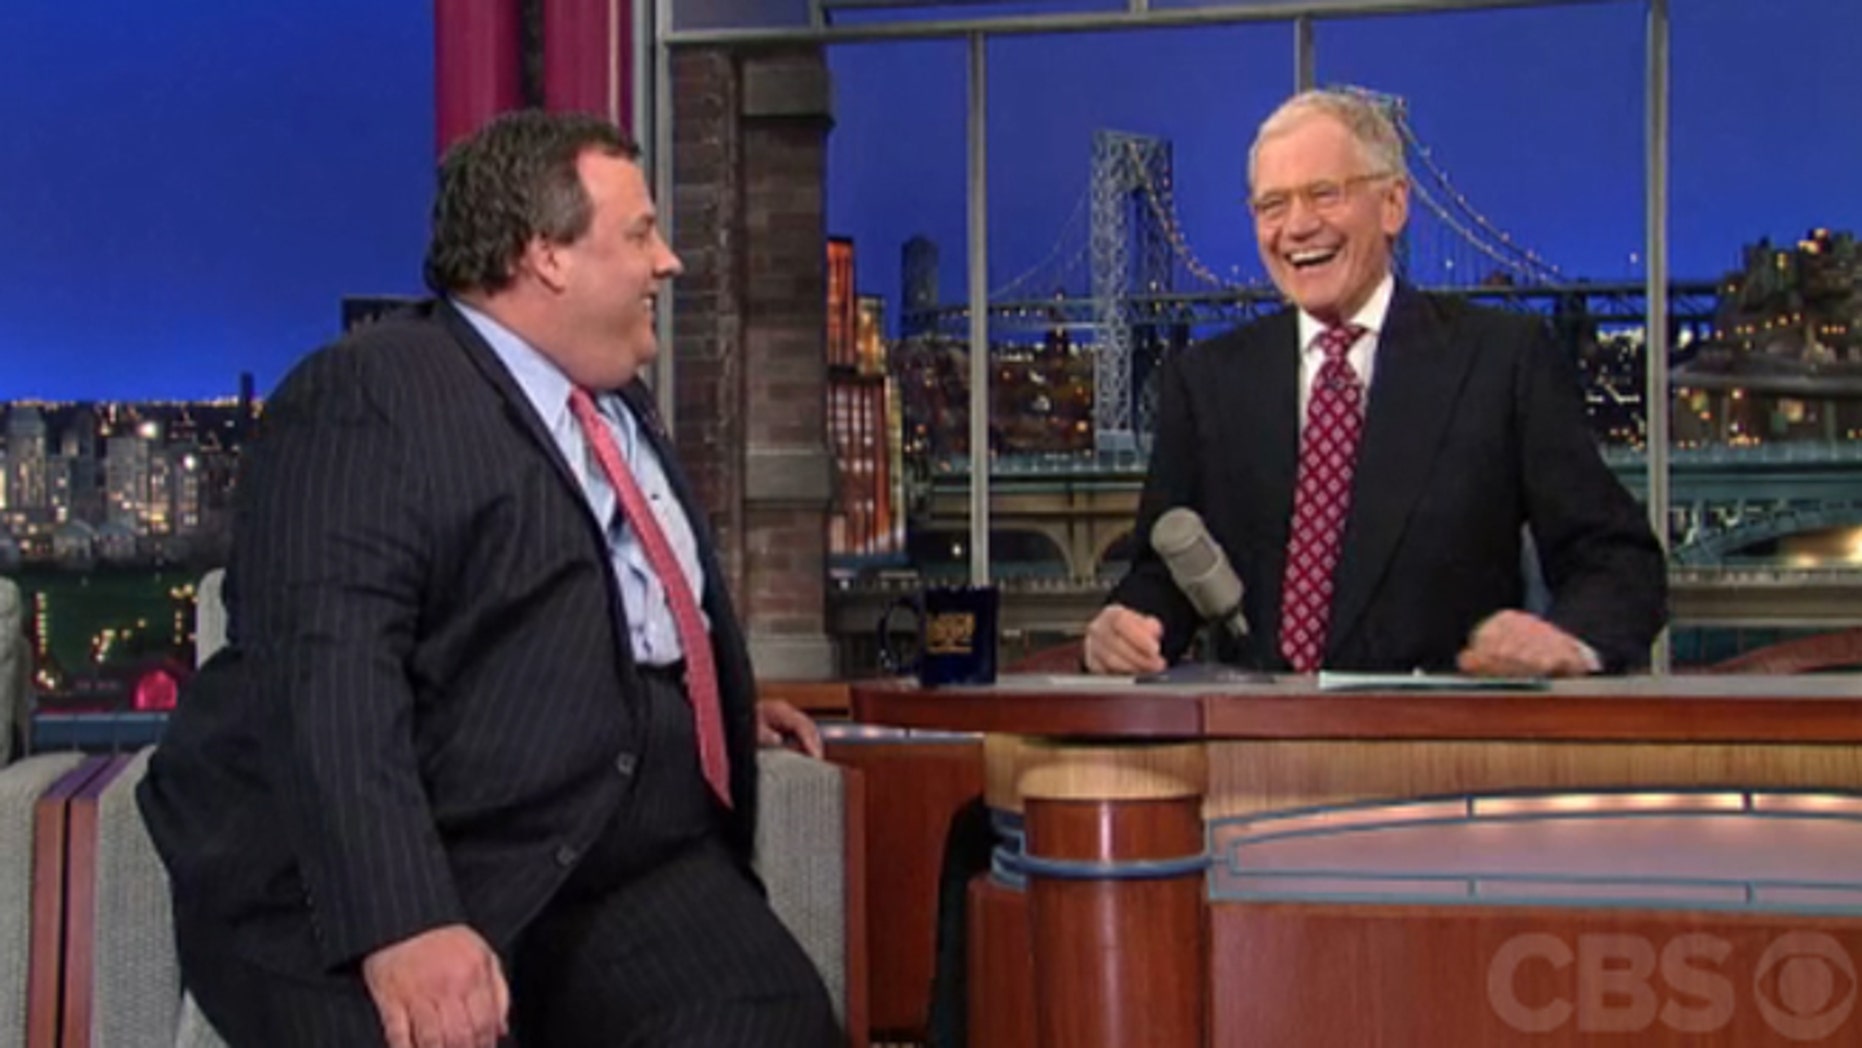 Gov. Chris Christie tells David Letterman fat jokes don't bother him ...